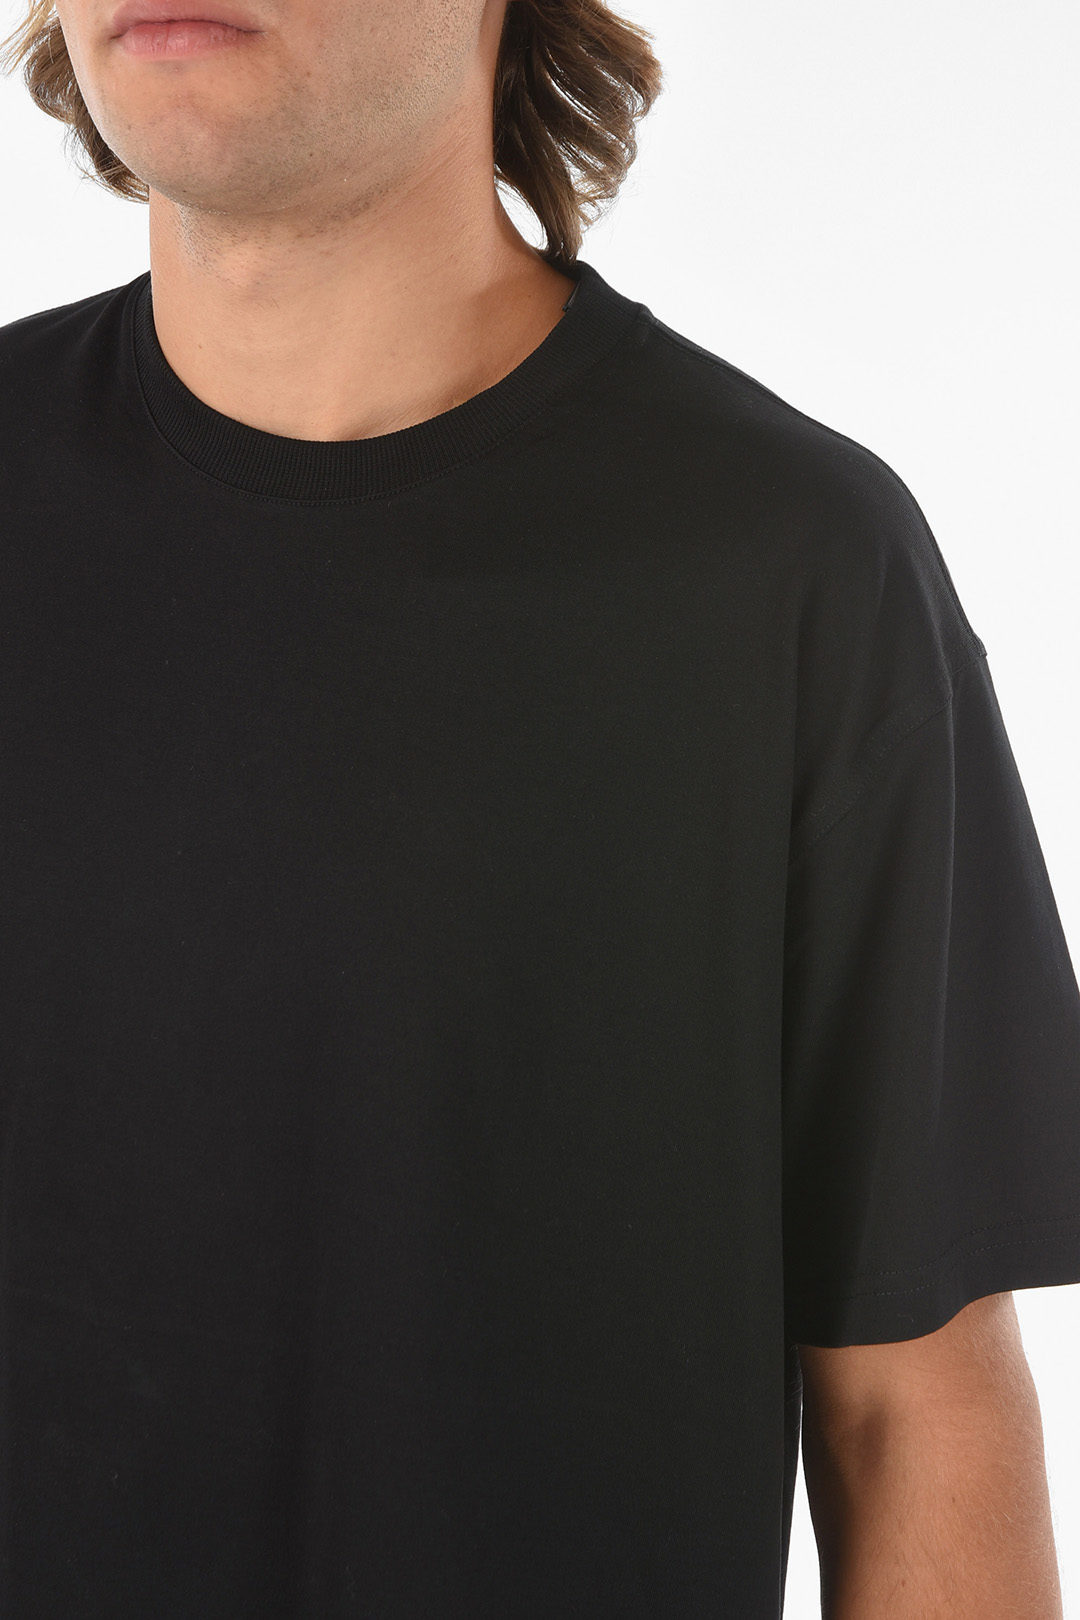 Oversize Black T-shirt Embossed Print